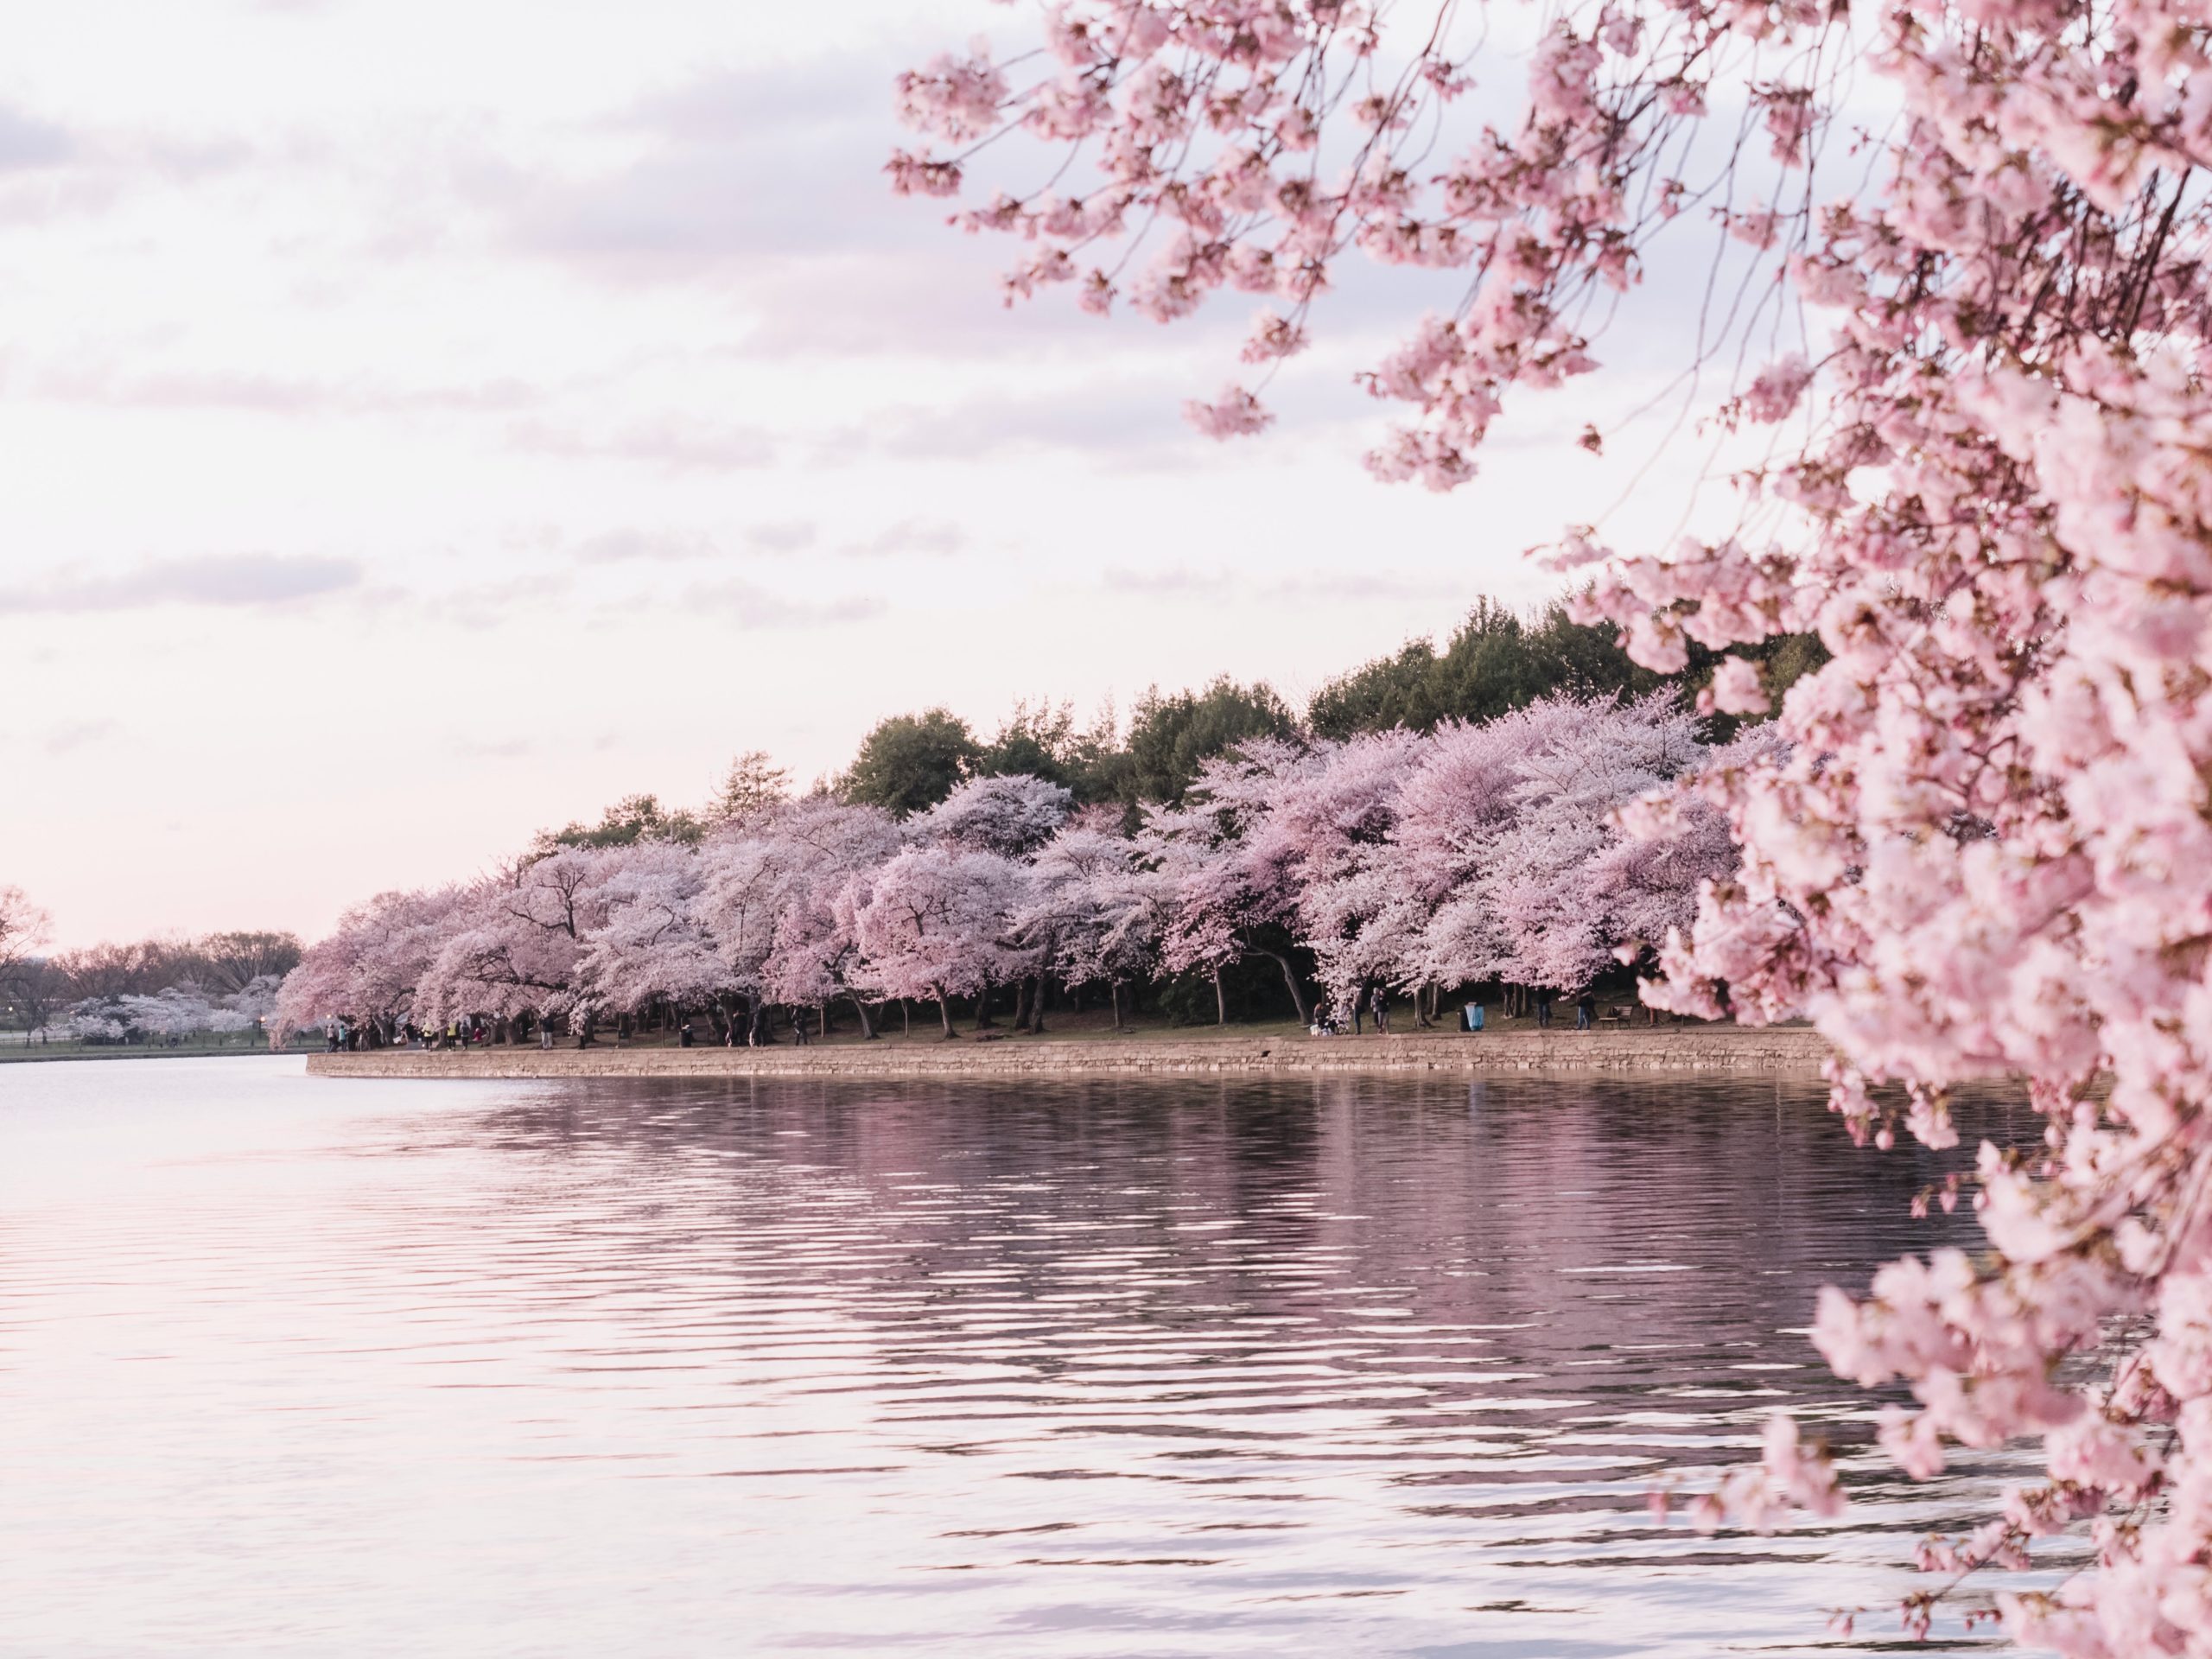 Alexandria Announces Events And Experiences For Cherry Blossom Season